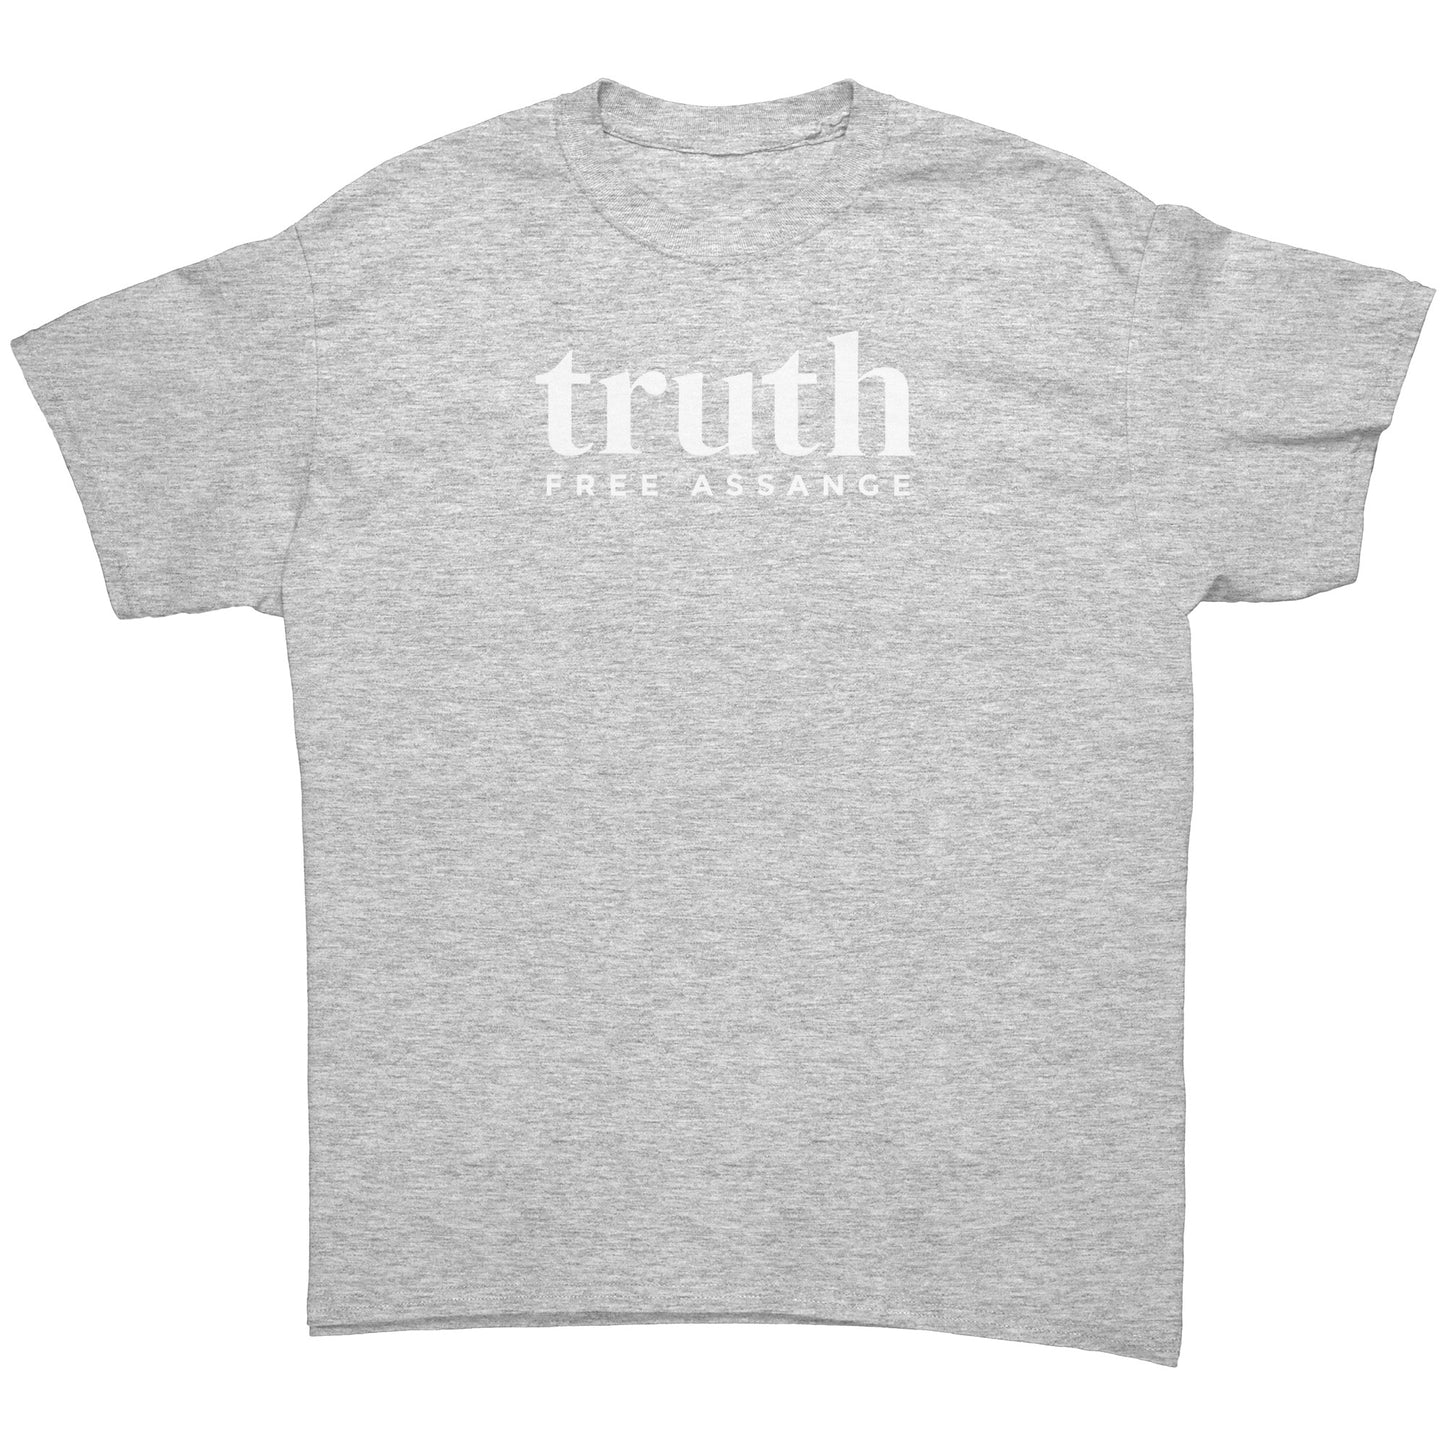 Truth Free Assange Men's T-Shirt